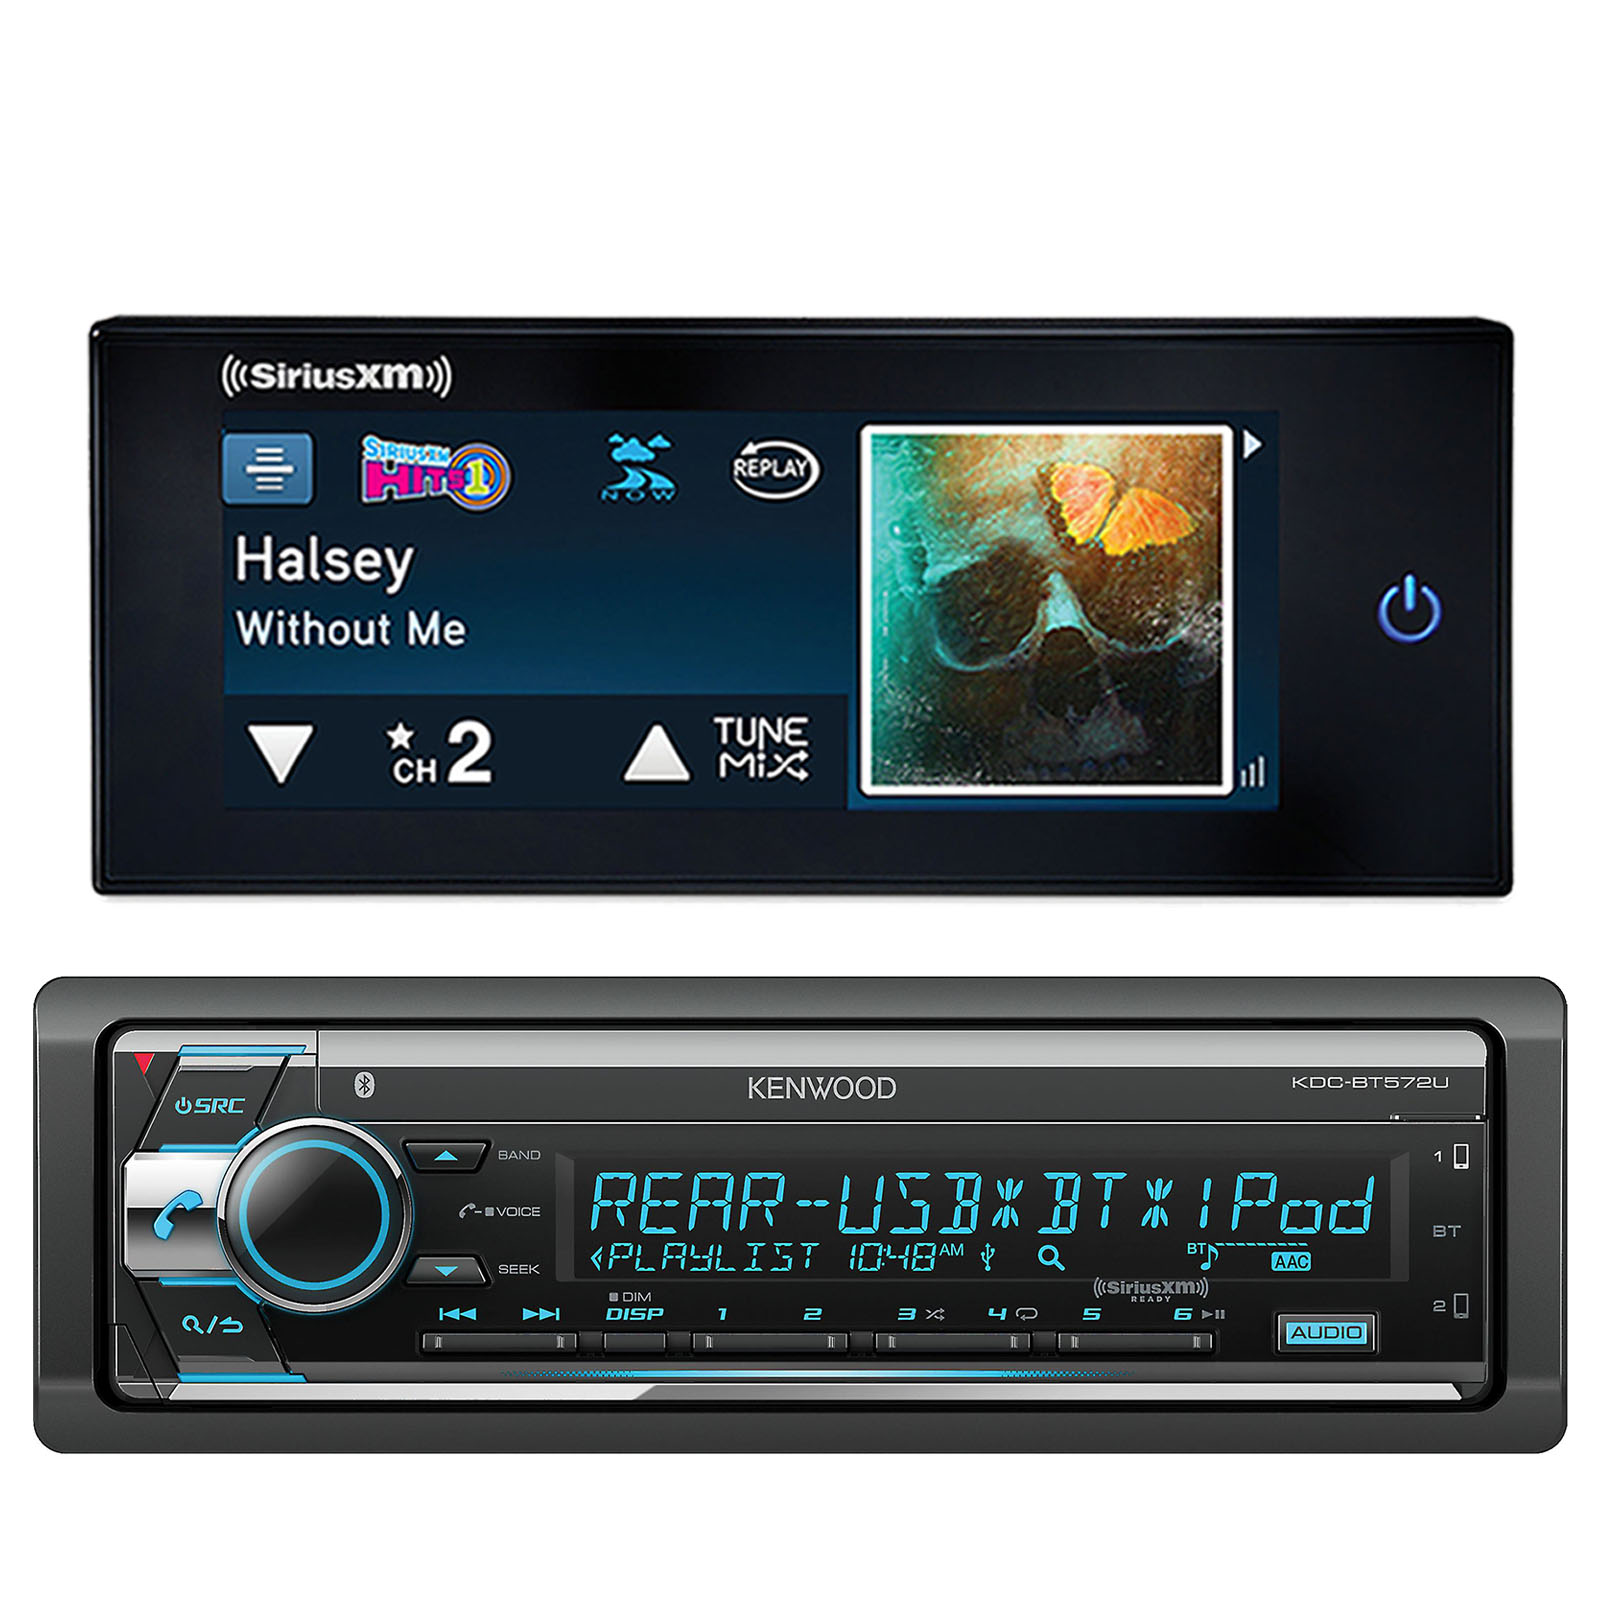 Kenwood CD AM/FM Bluetooth Stereo Receiver, Sirius